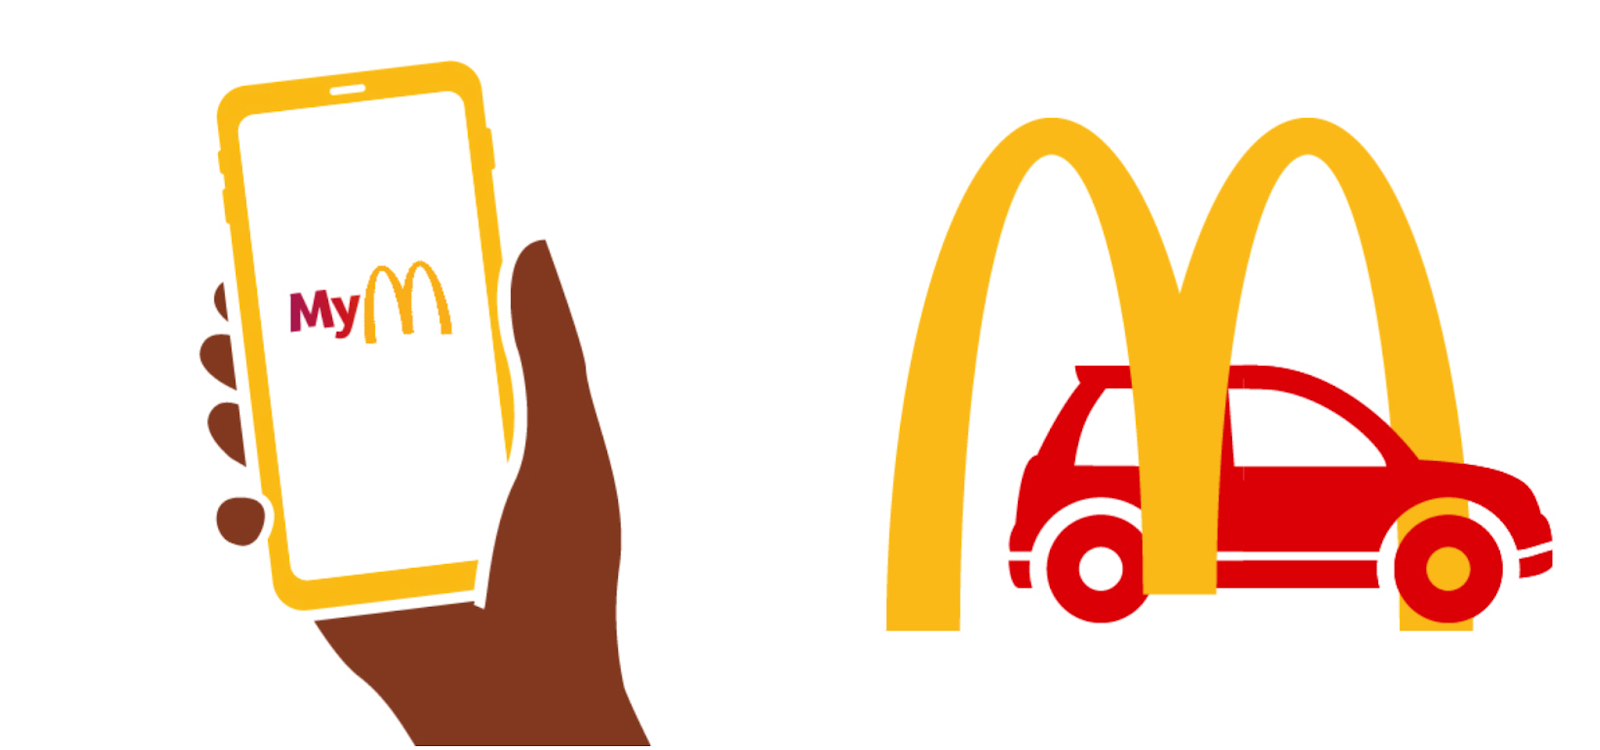 McDonald's logo mark usage